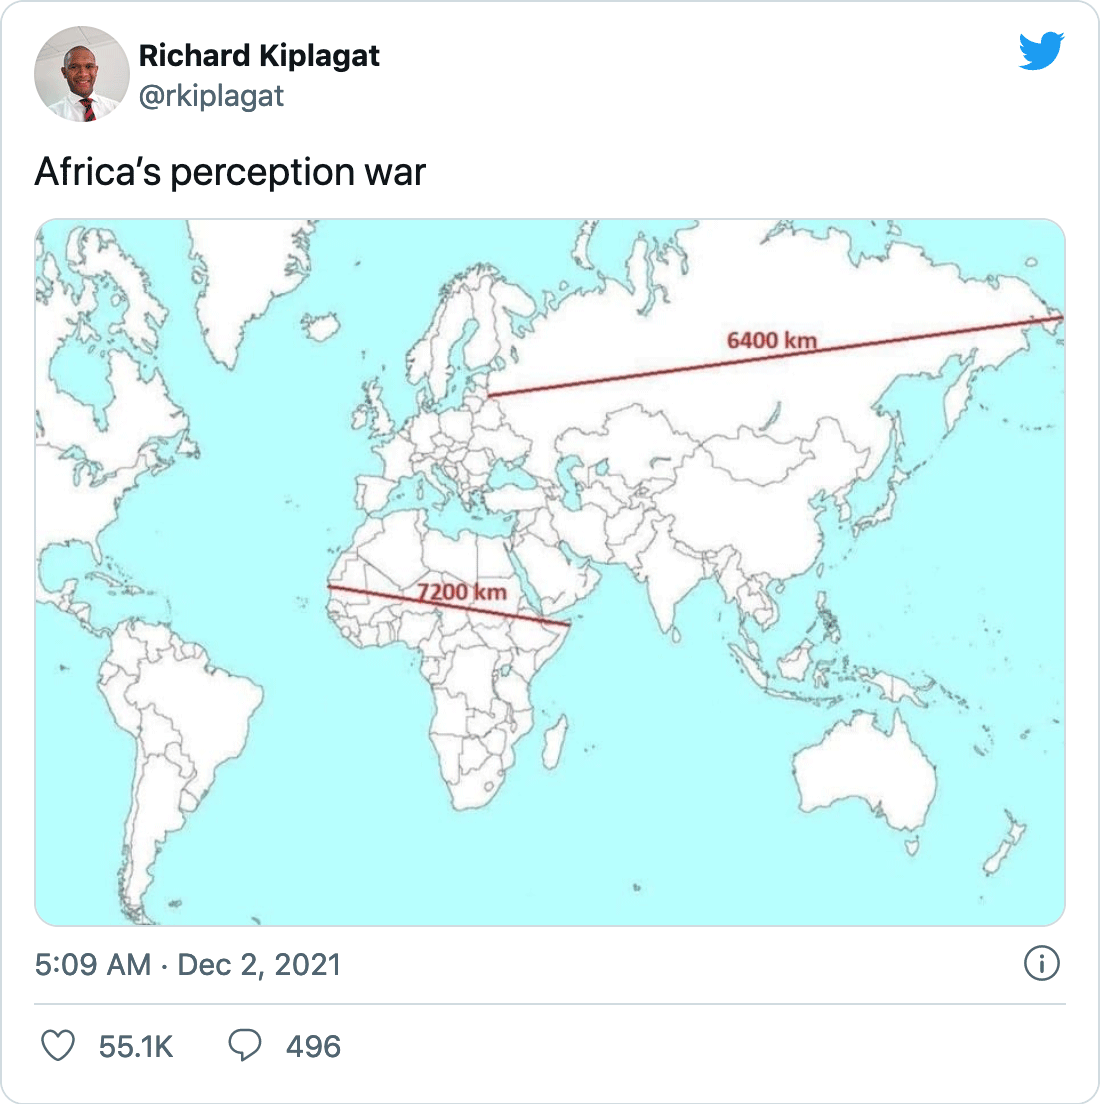 Africa’s perception war, a tweet by Richard Kiplagat